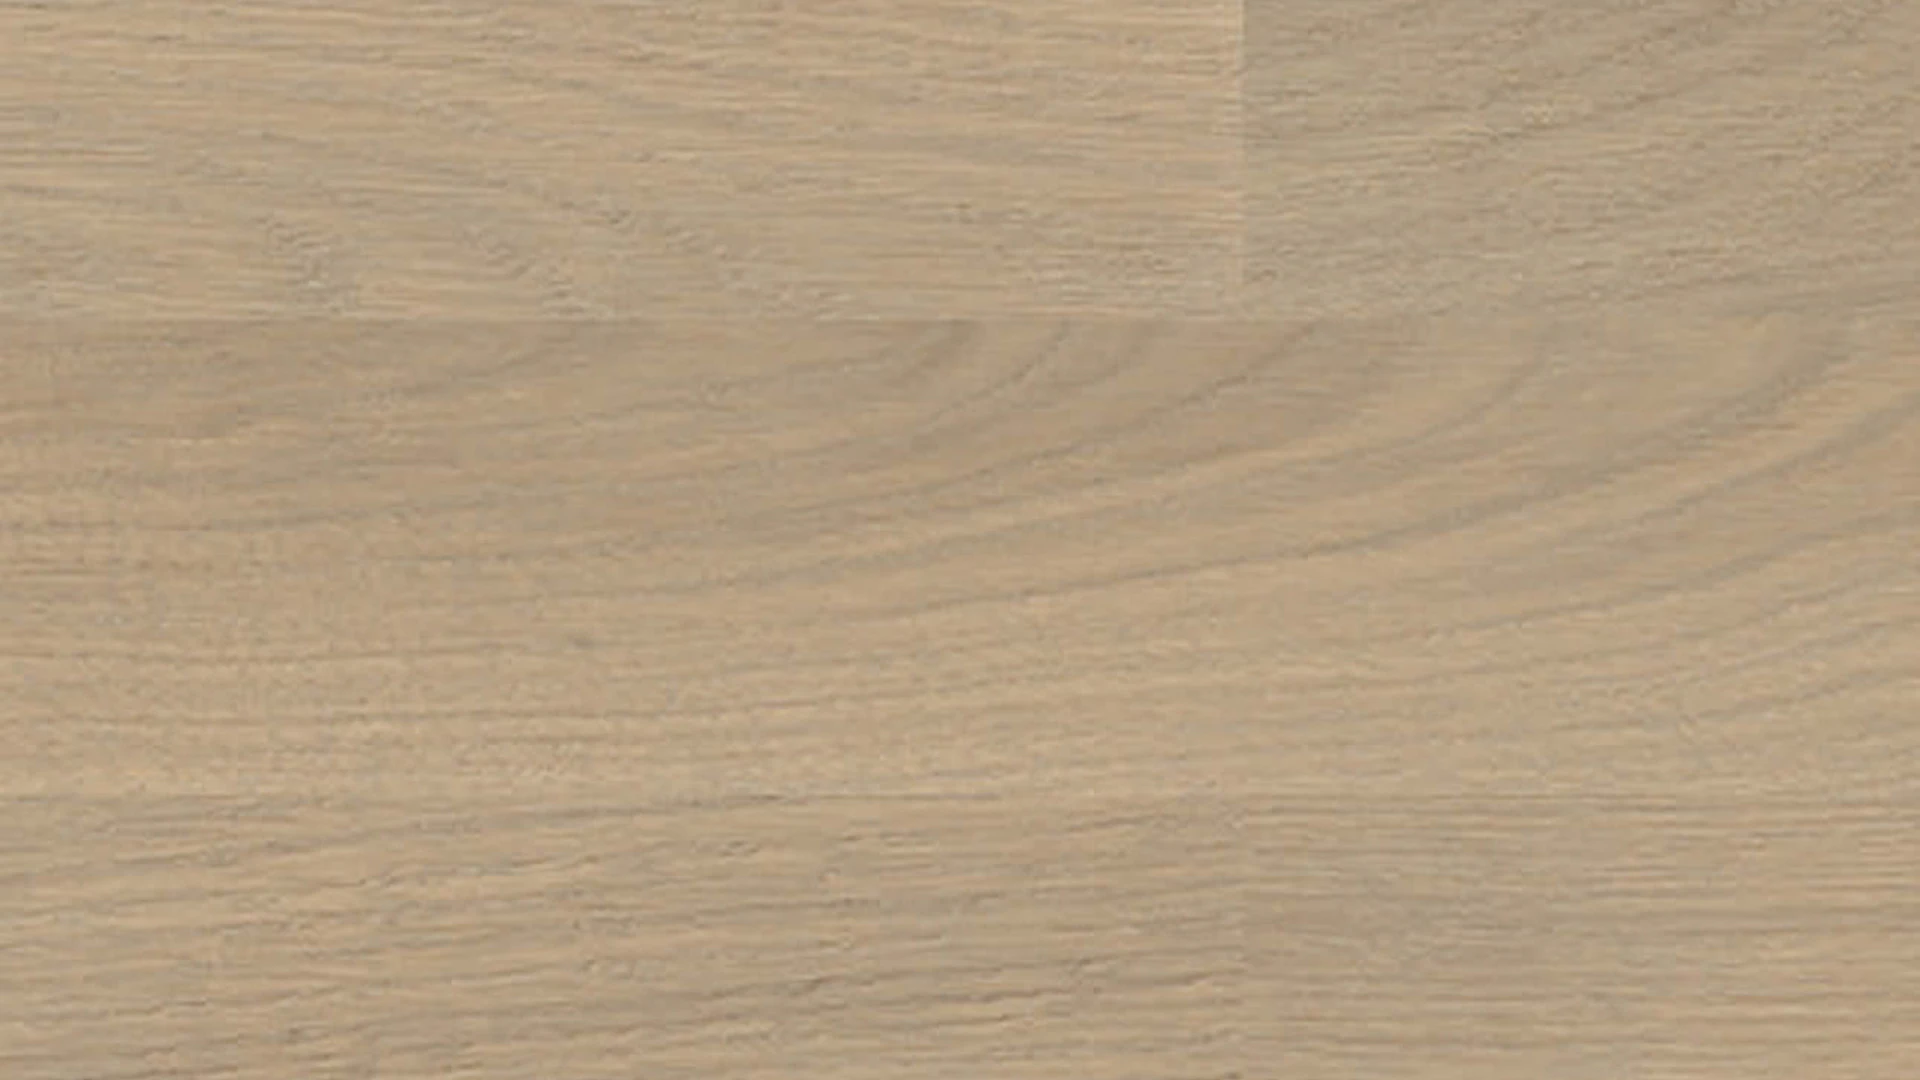 Haro Parquet - Series 4000 Stab Allegro naturaLin plus Chêne gris sable tendance (540136)